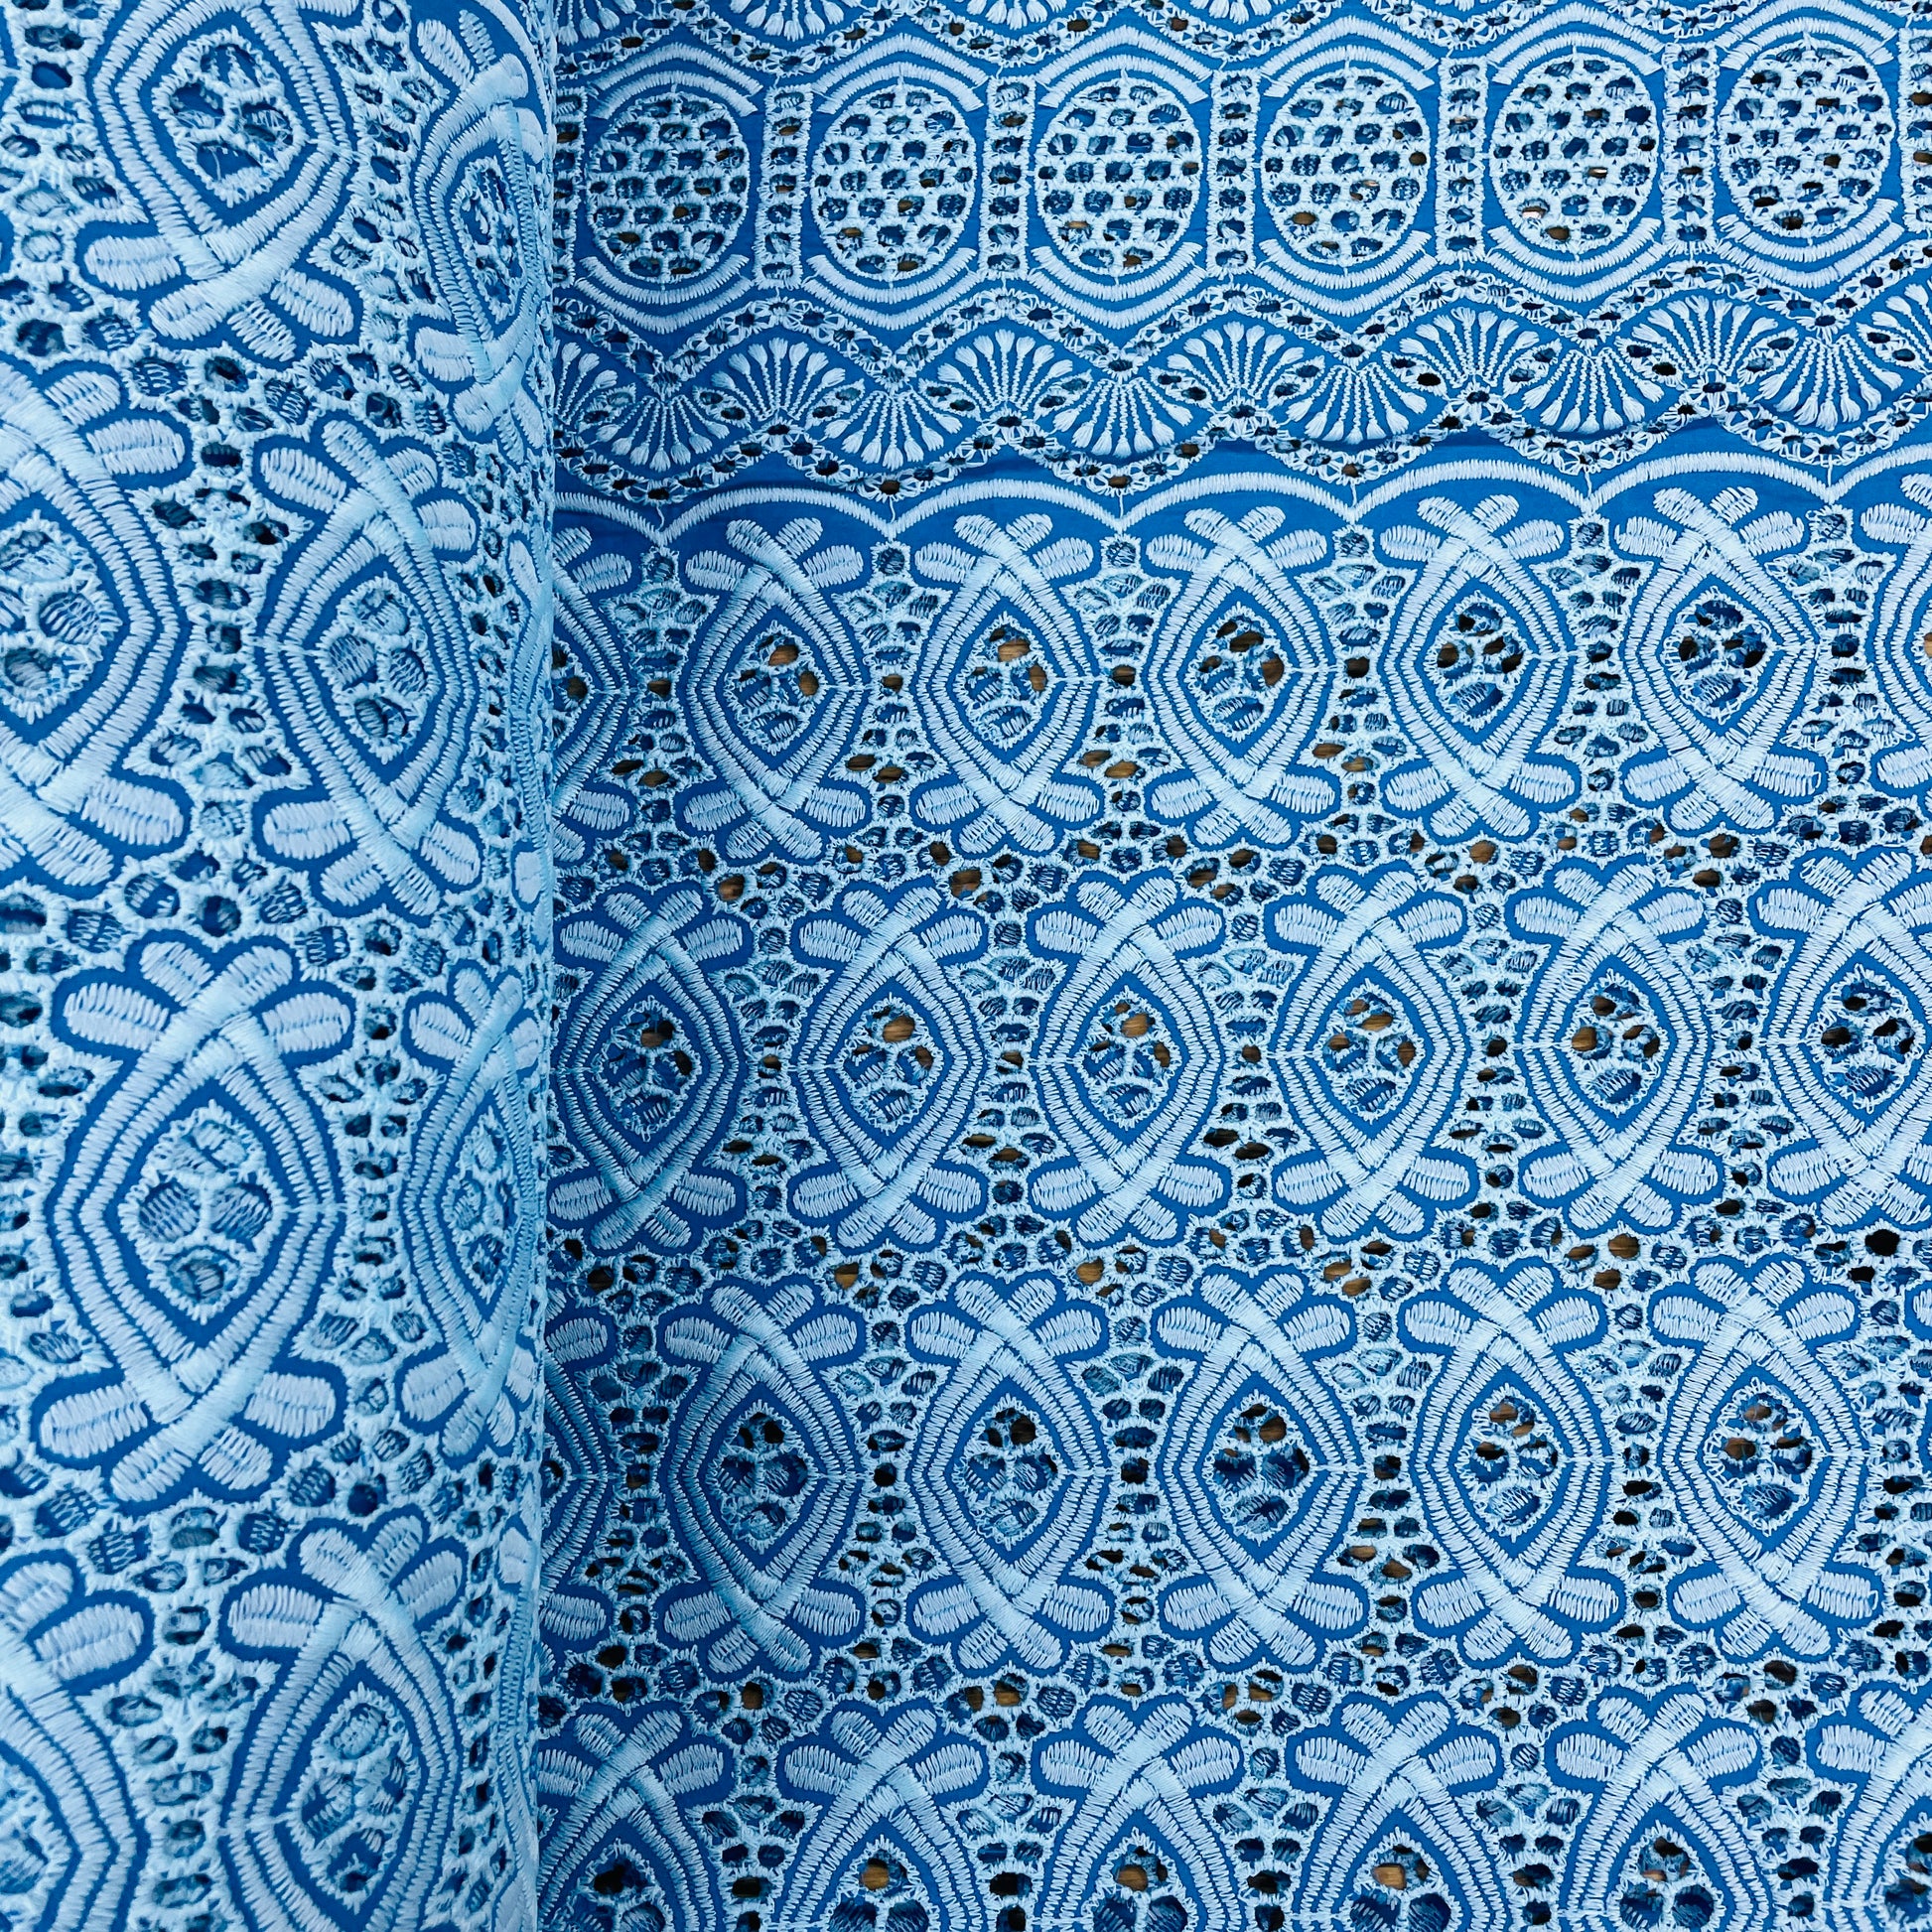 Blue Schiffli Embroidery Cotton Fabric